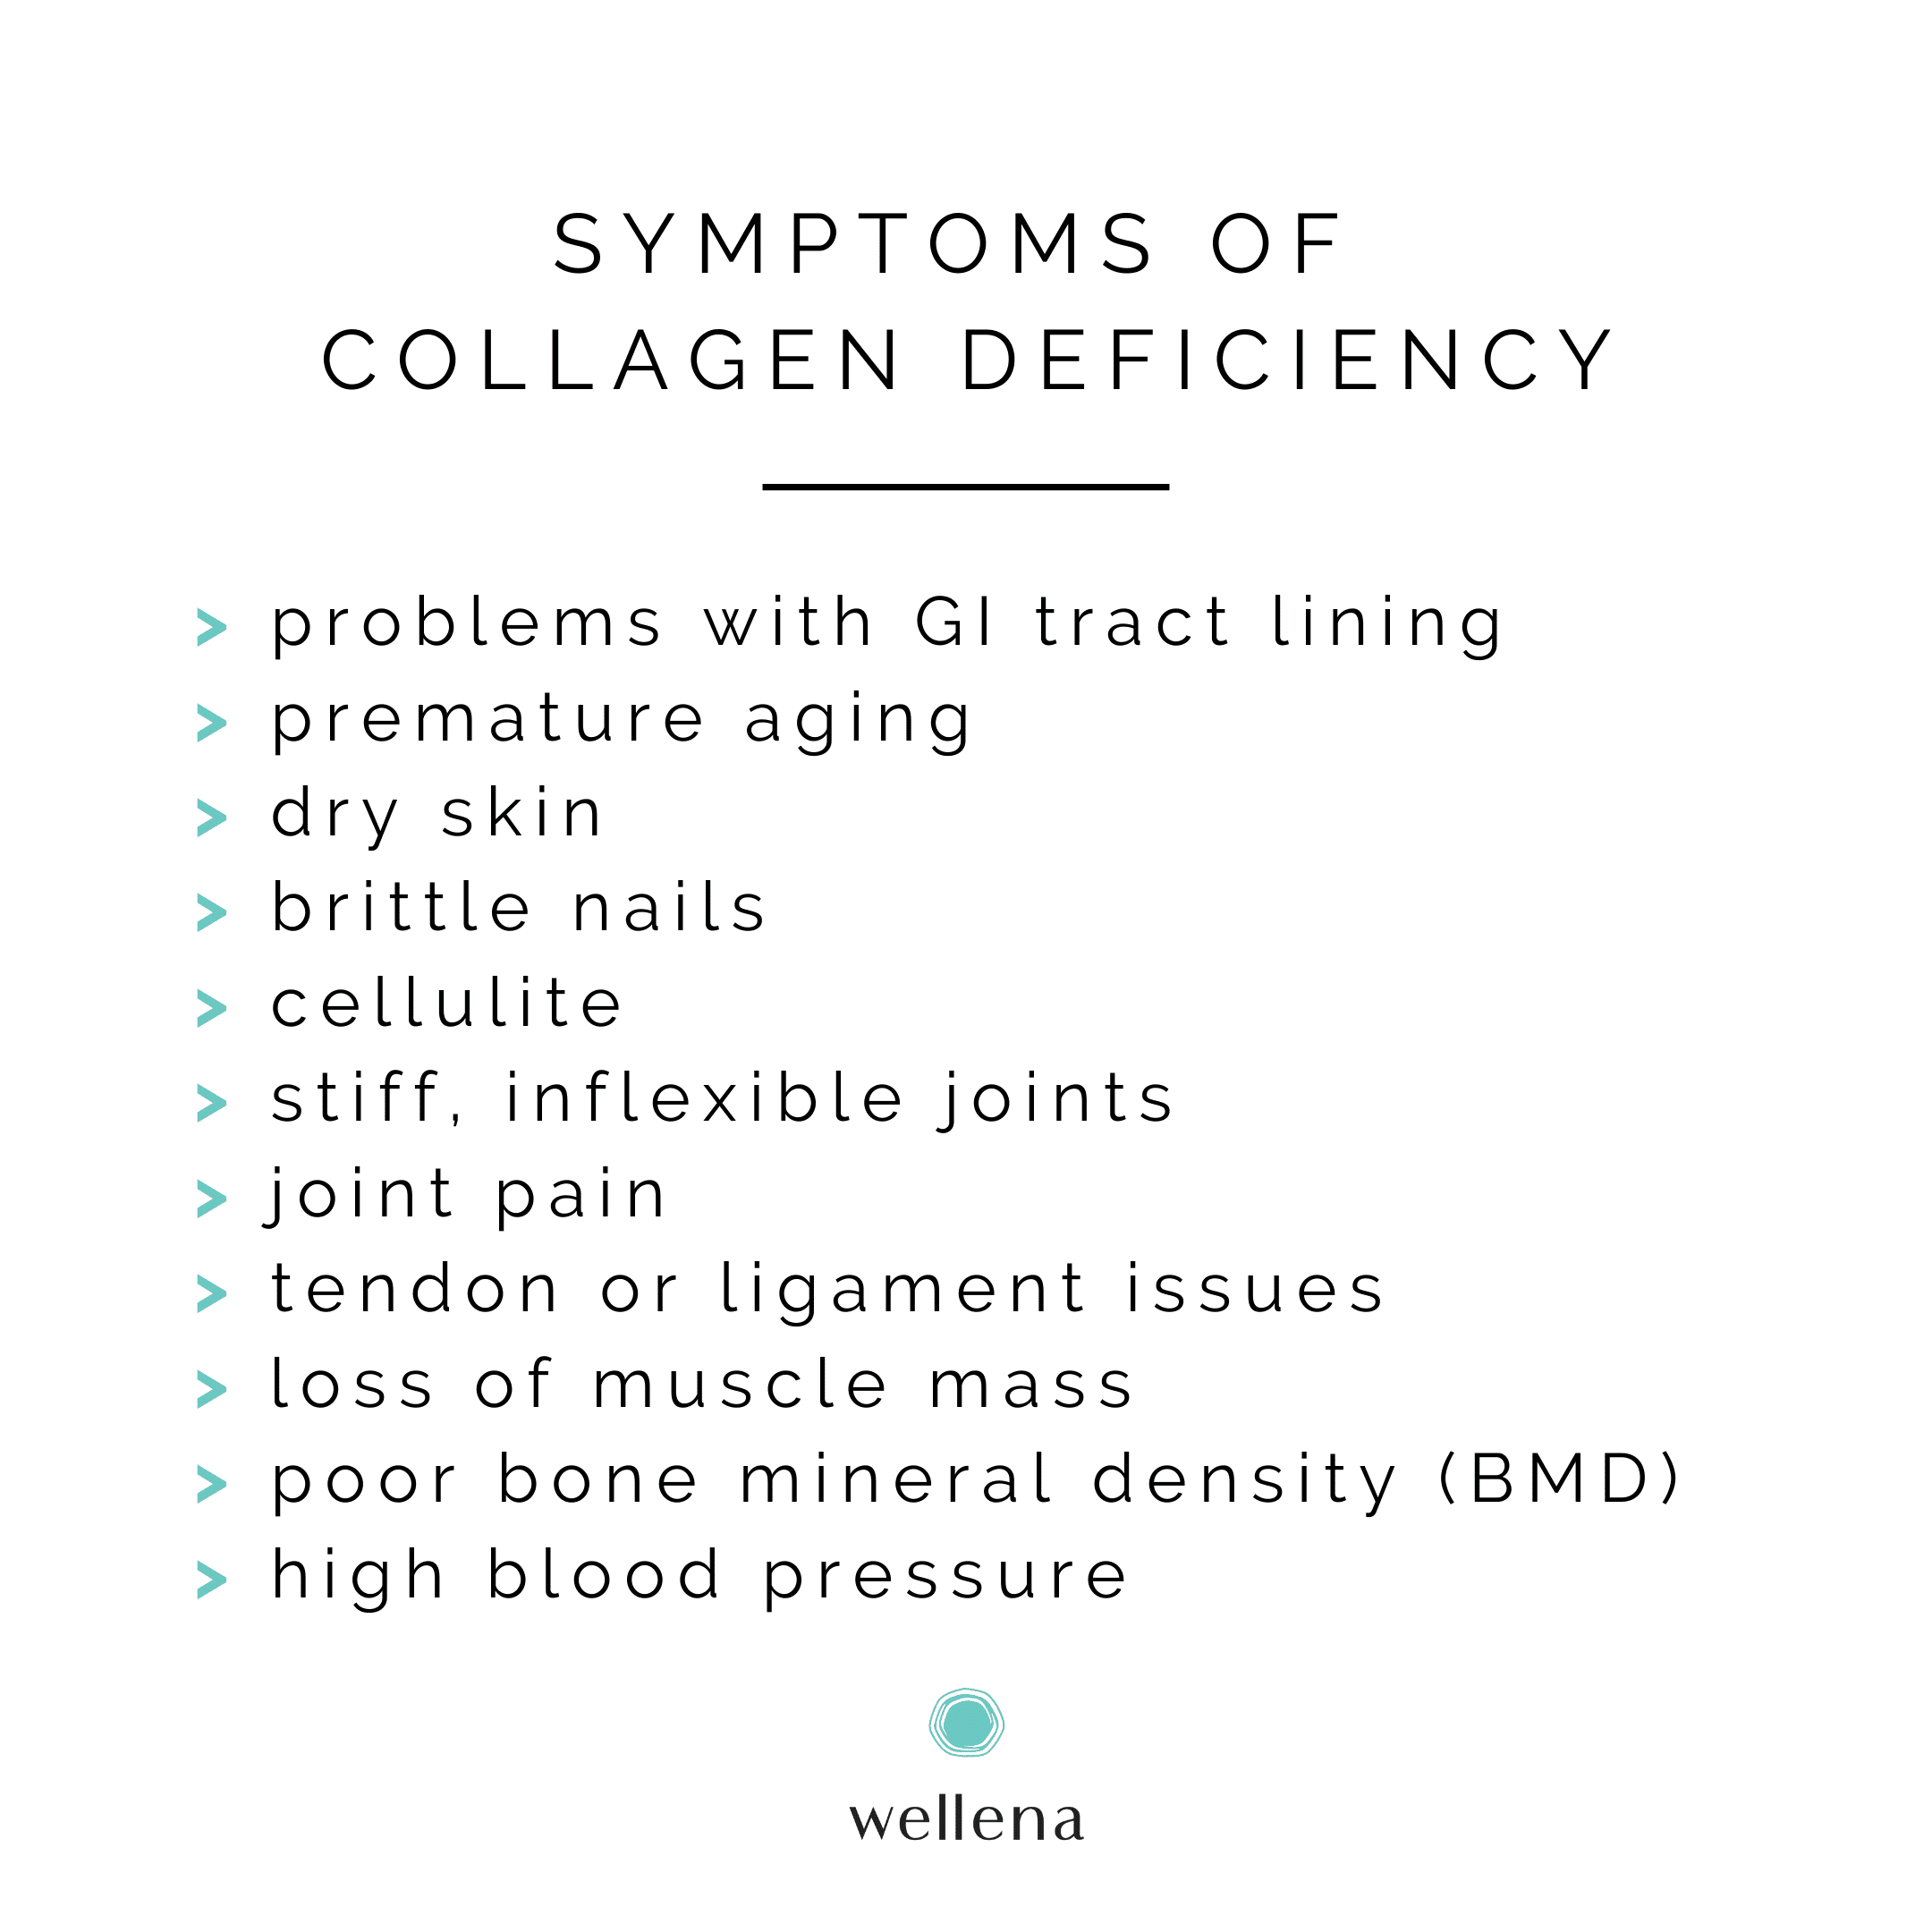 Symptoms of Collagen Deficiency